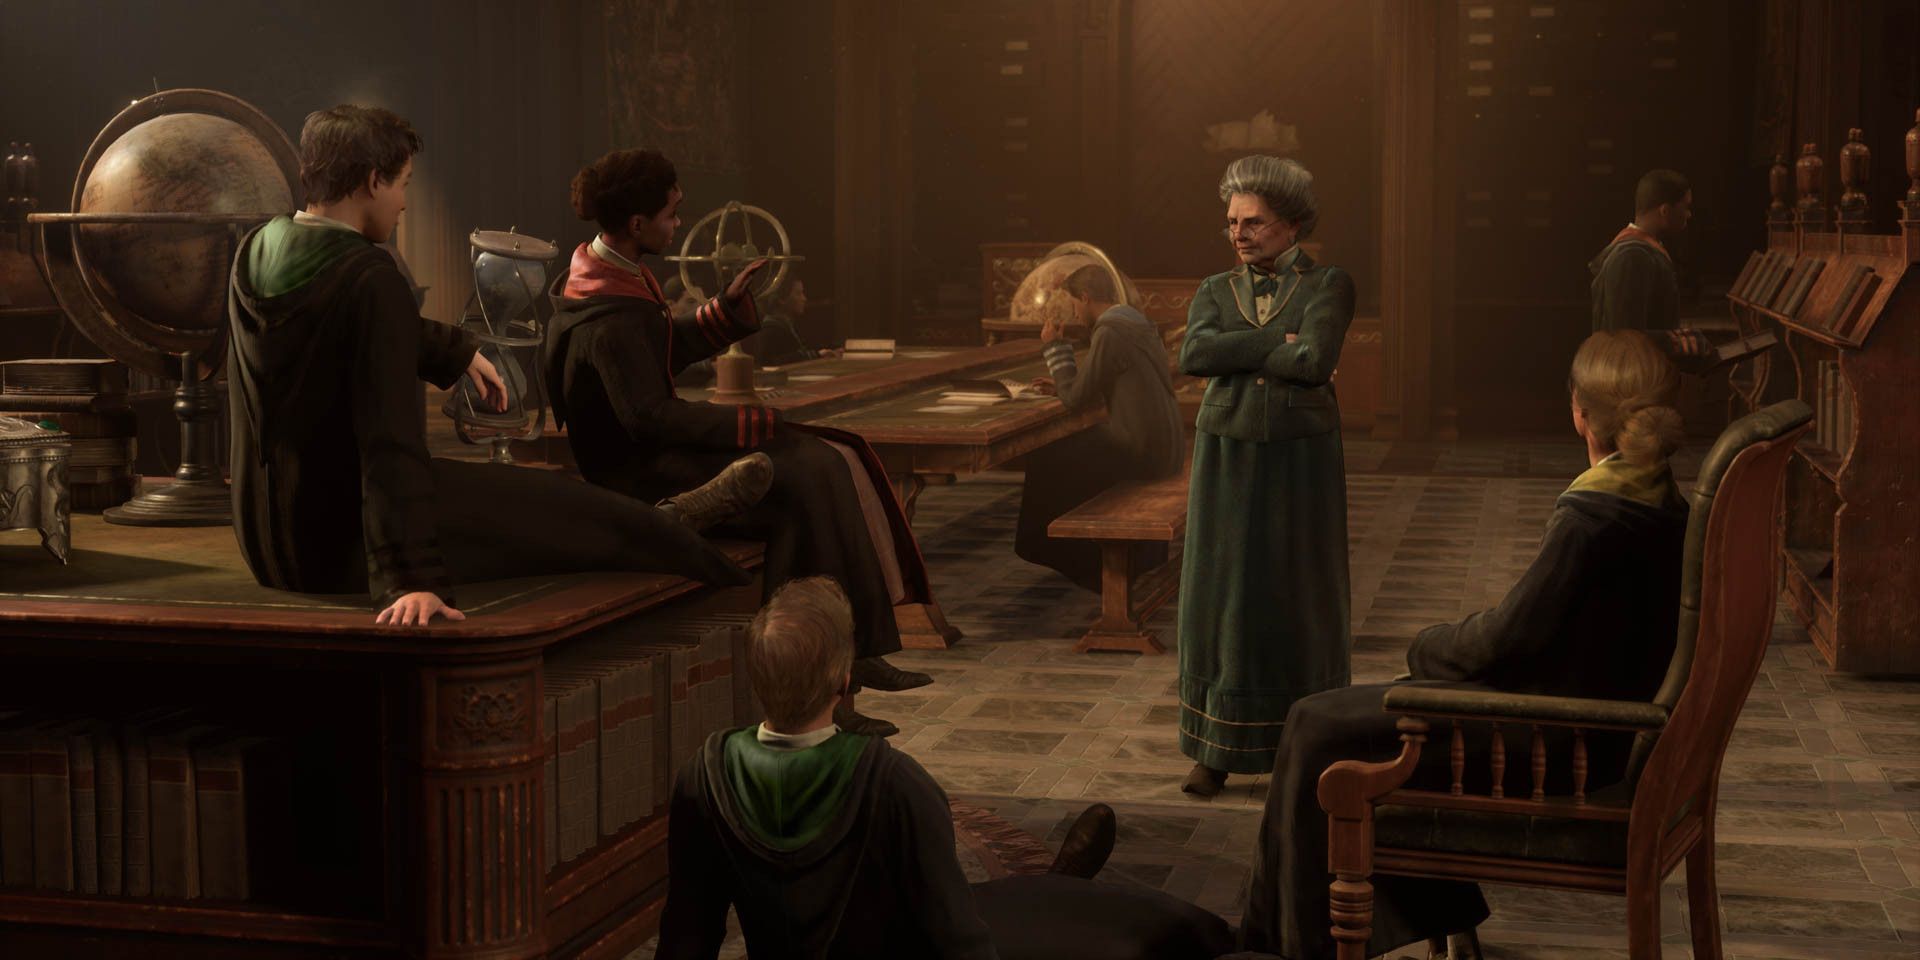 harry potter hogwarts legacy release date